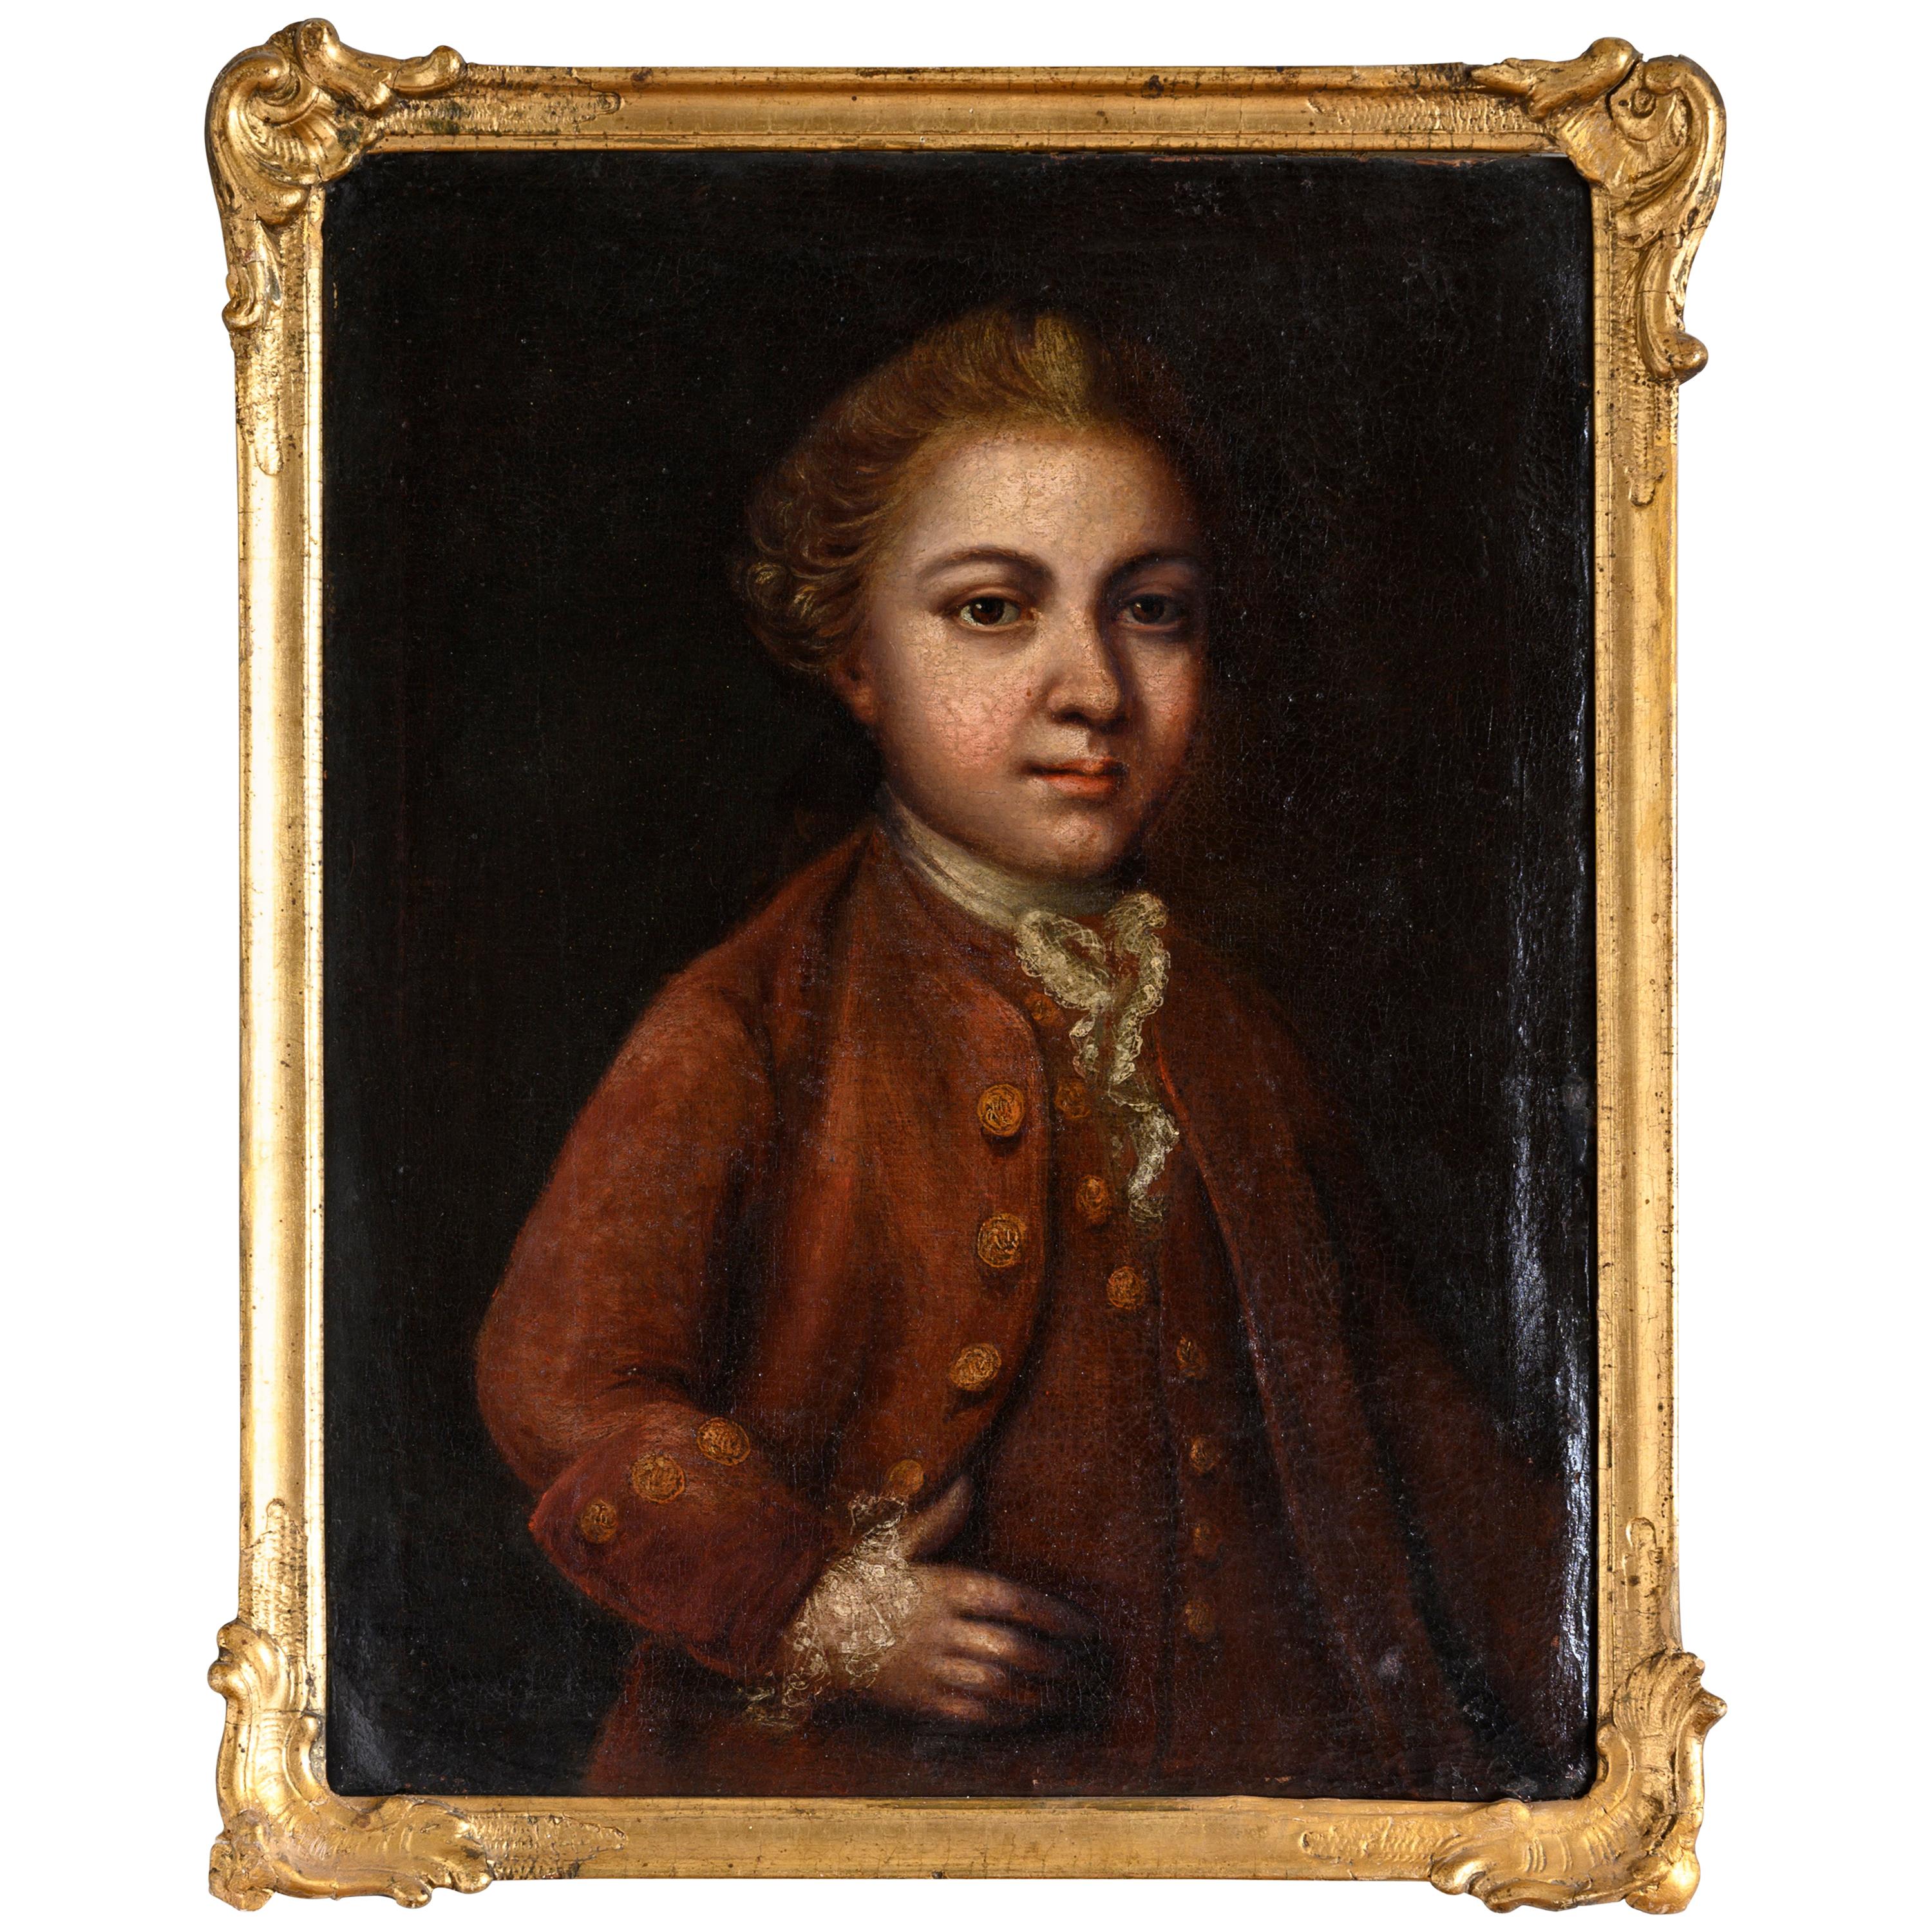 18th Century Portrait